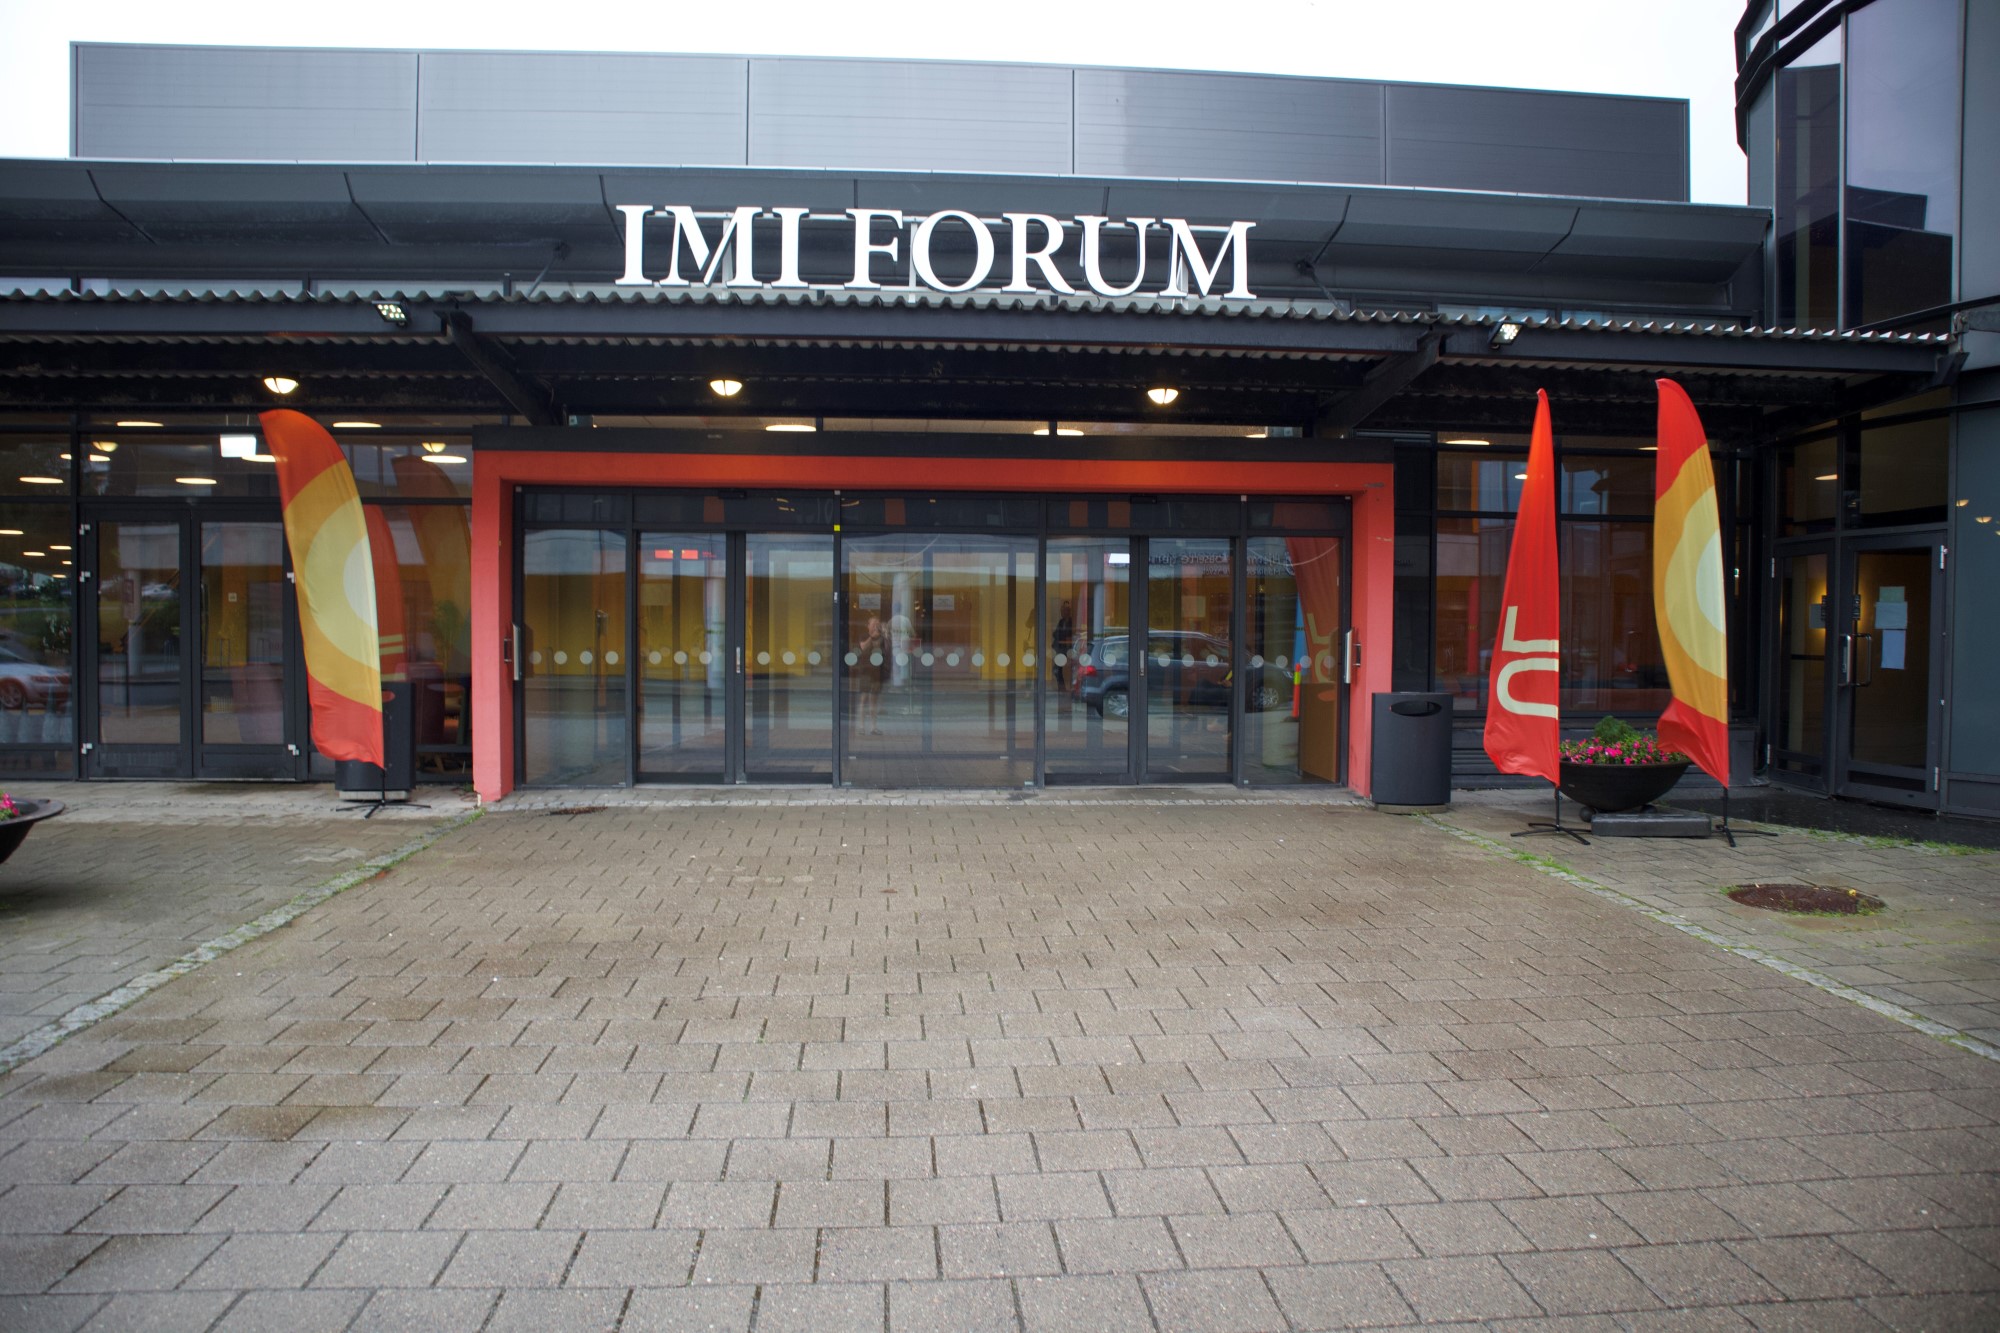 IMI Forum